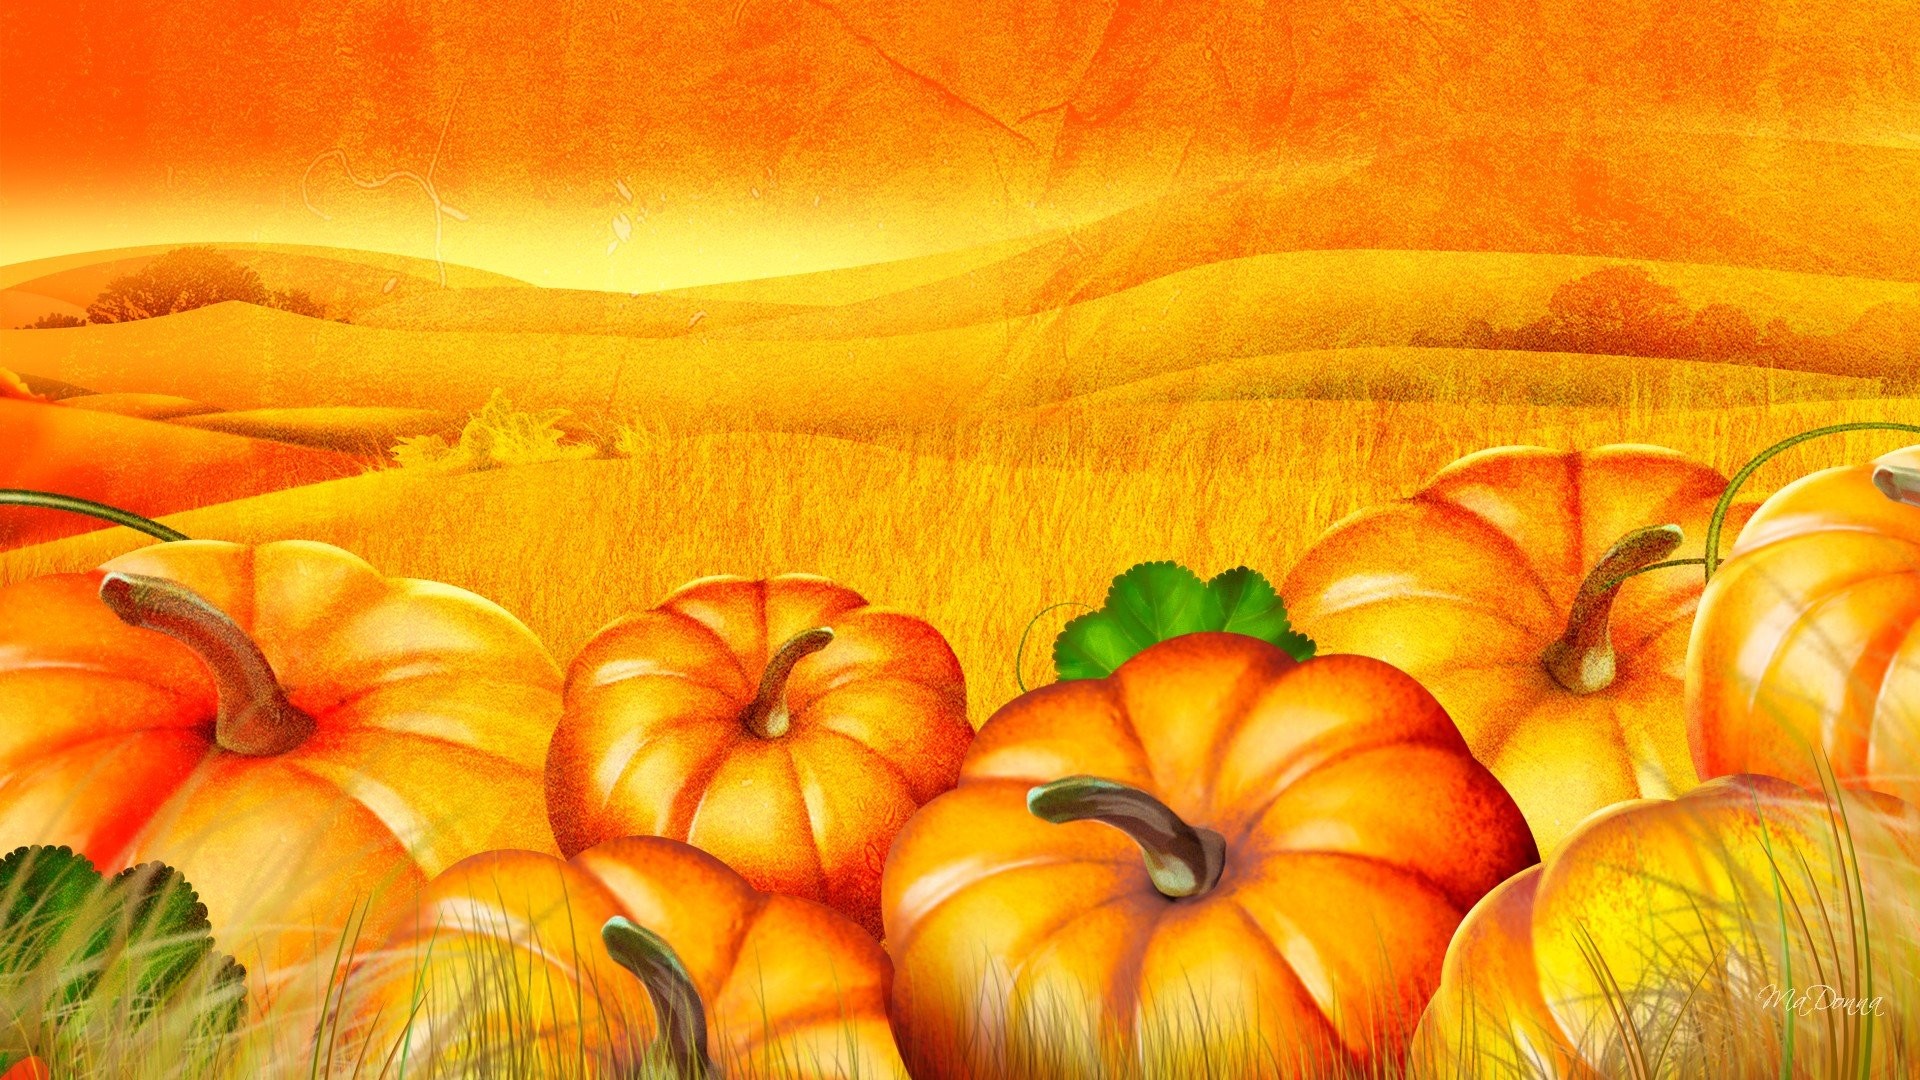 1920x1080 halloween pumpkin wallpapers free free desktop pumpkin wallpapers hd